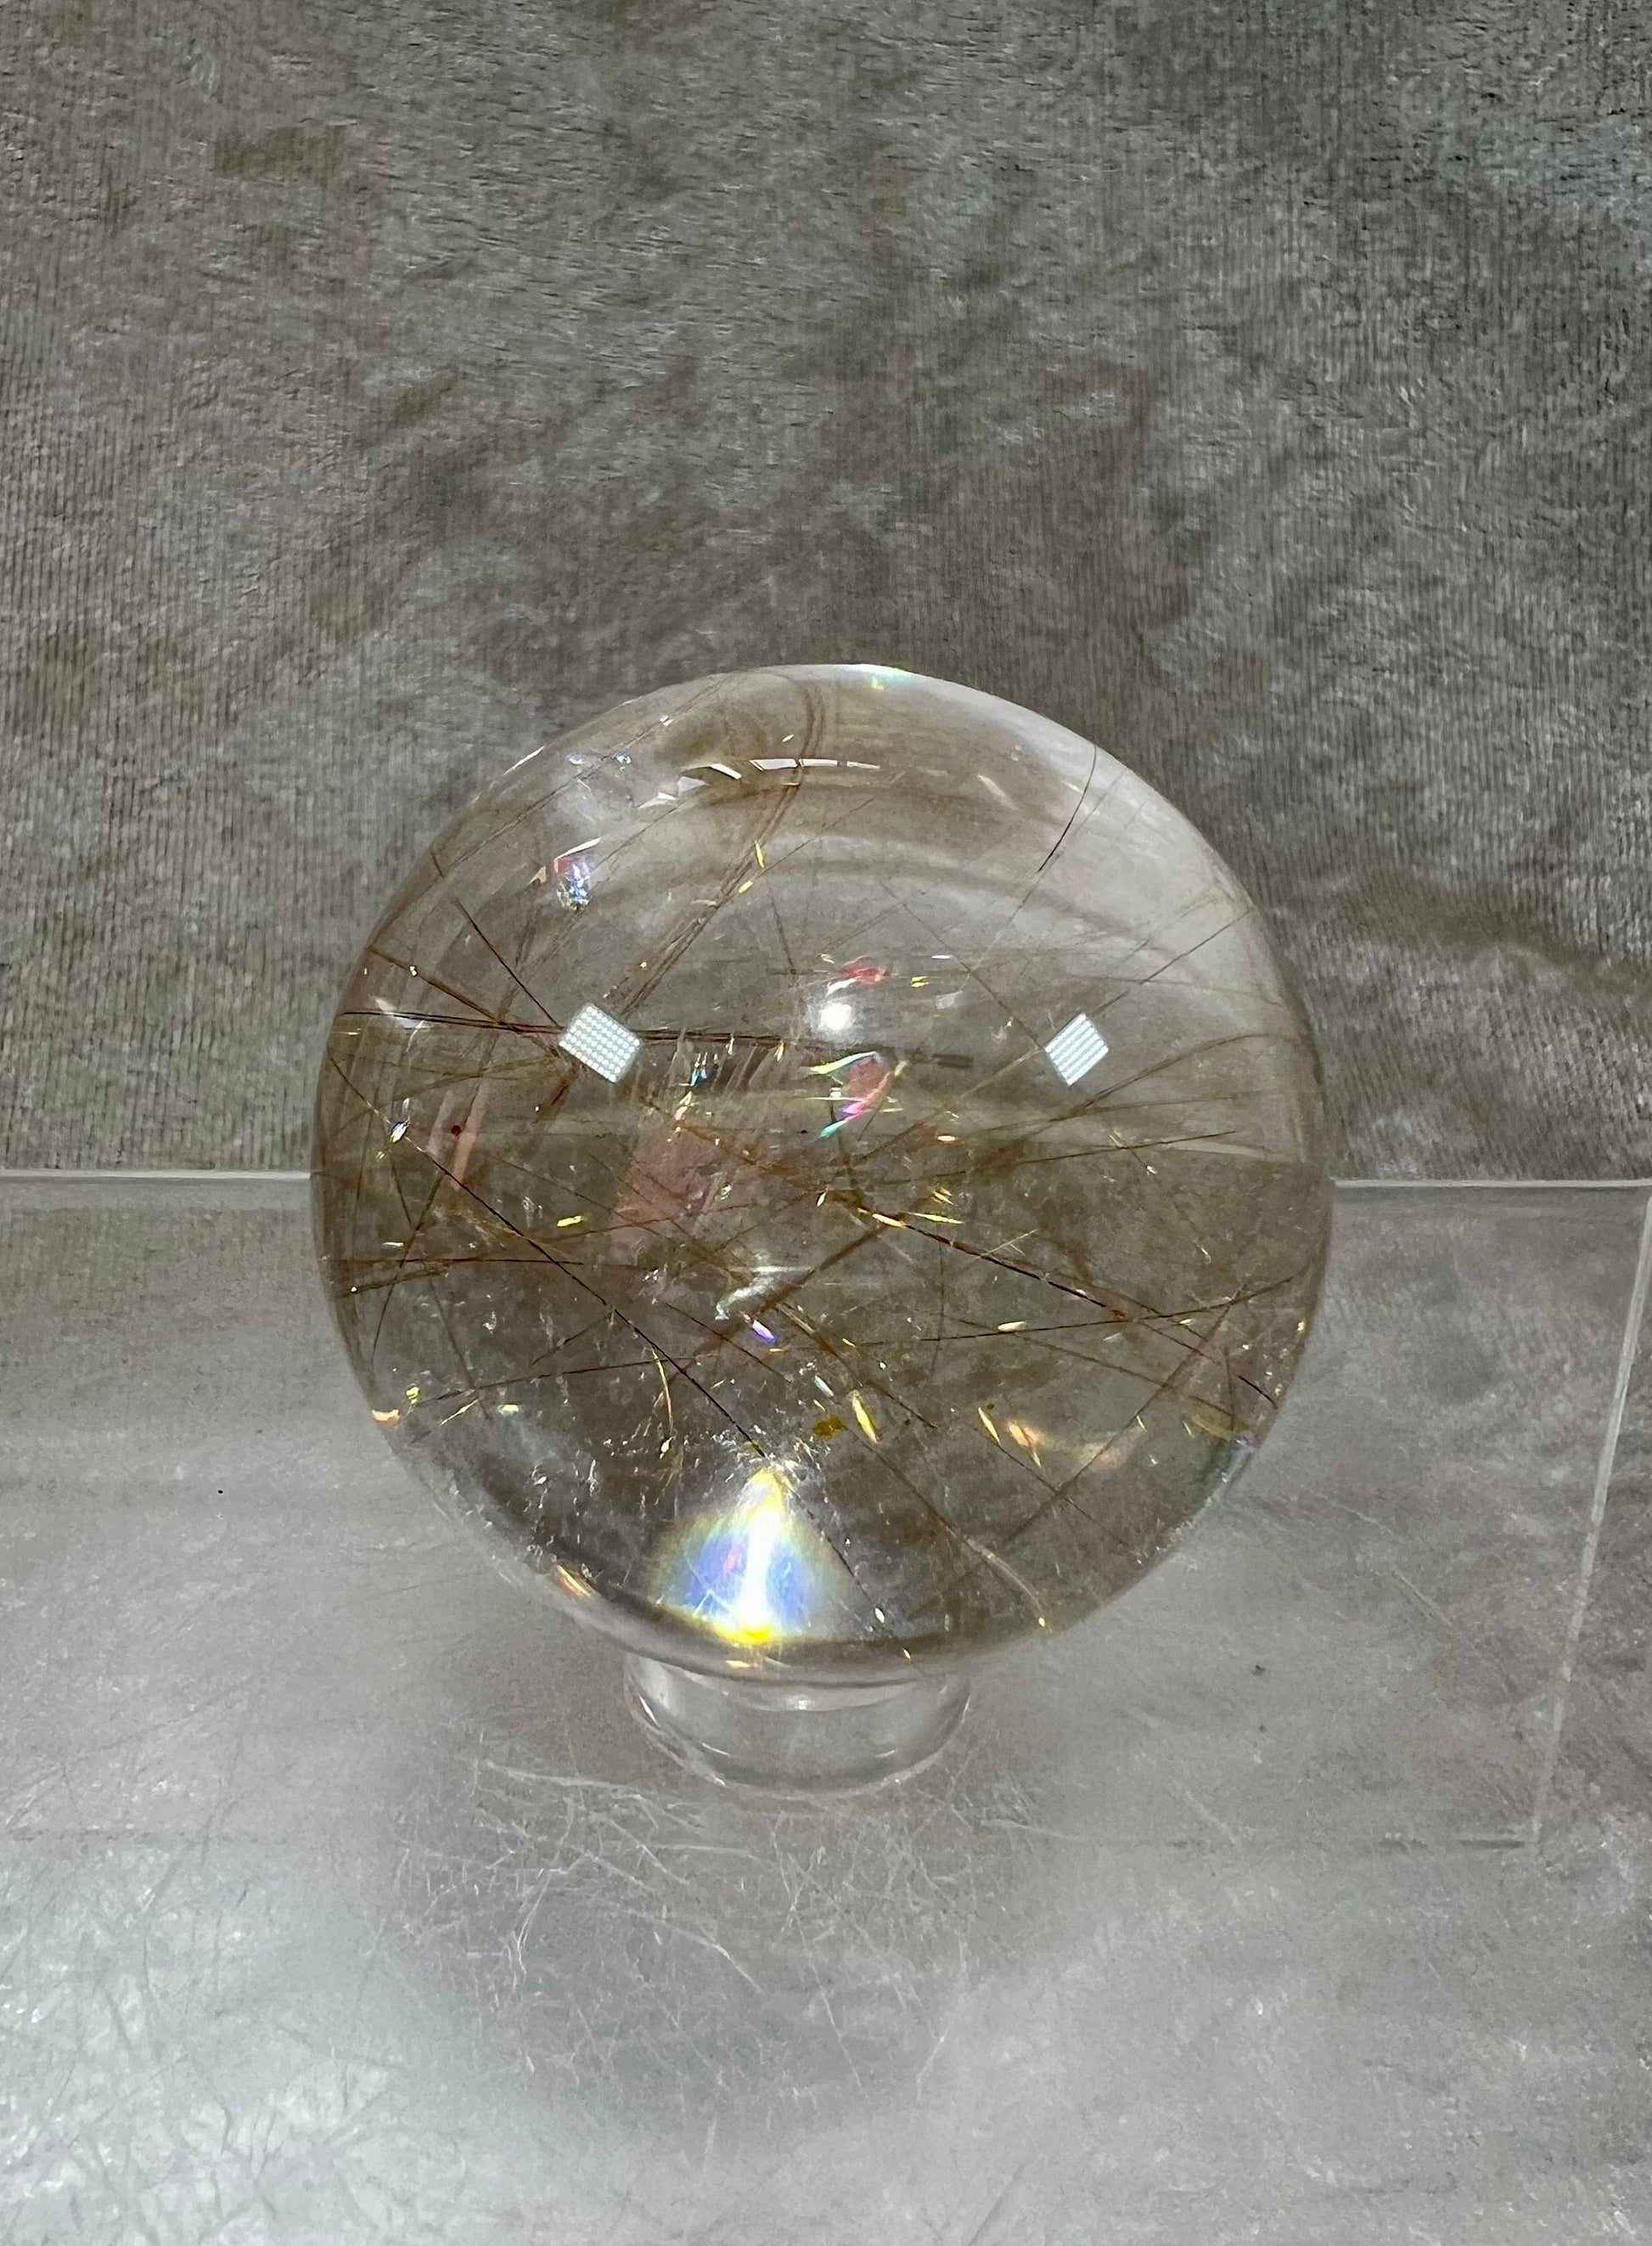 Gorgeous Golden Rutile Quartz Sphere. Big Rainbows! High Quality Incredible Rutilated Quartz Sphere.